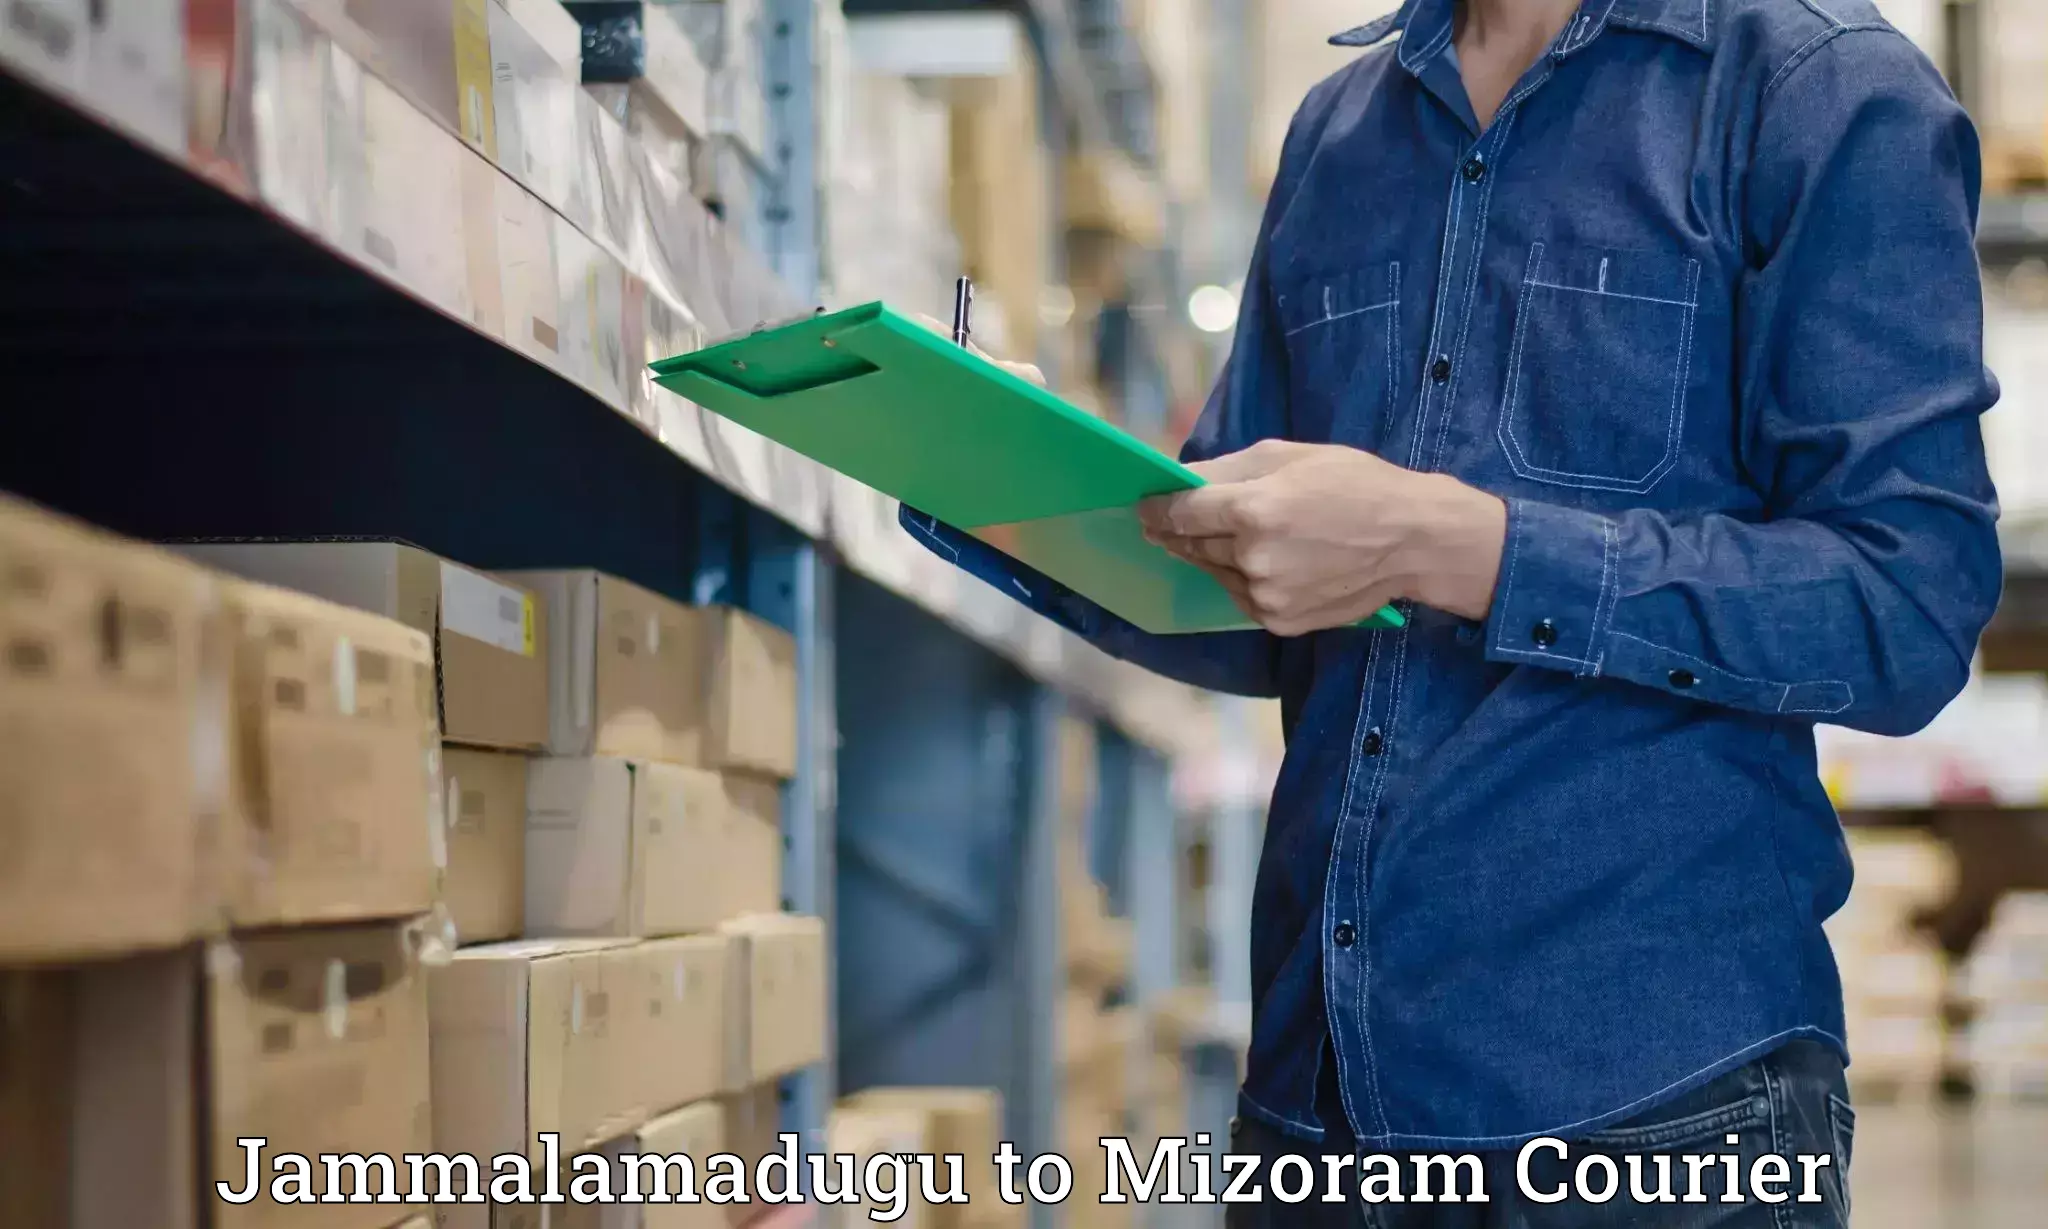 High-speed parcel service Jammalamadugu to Mizoram